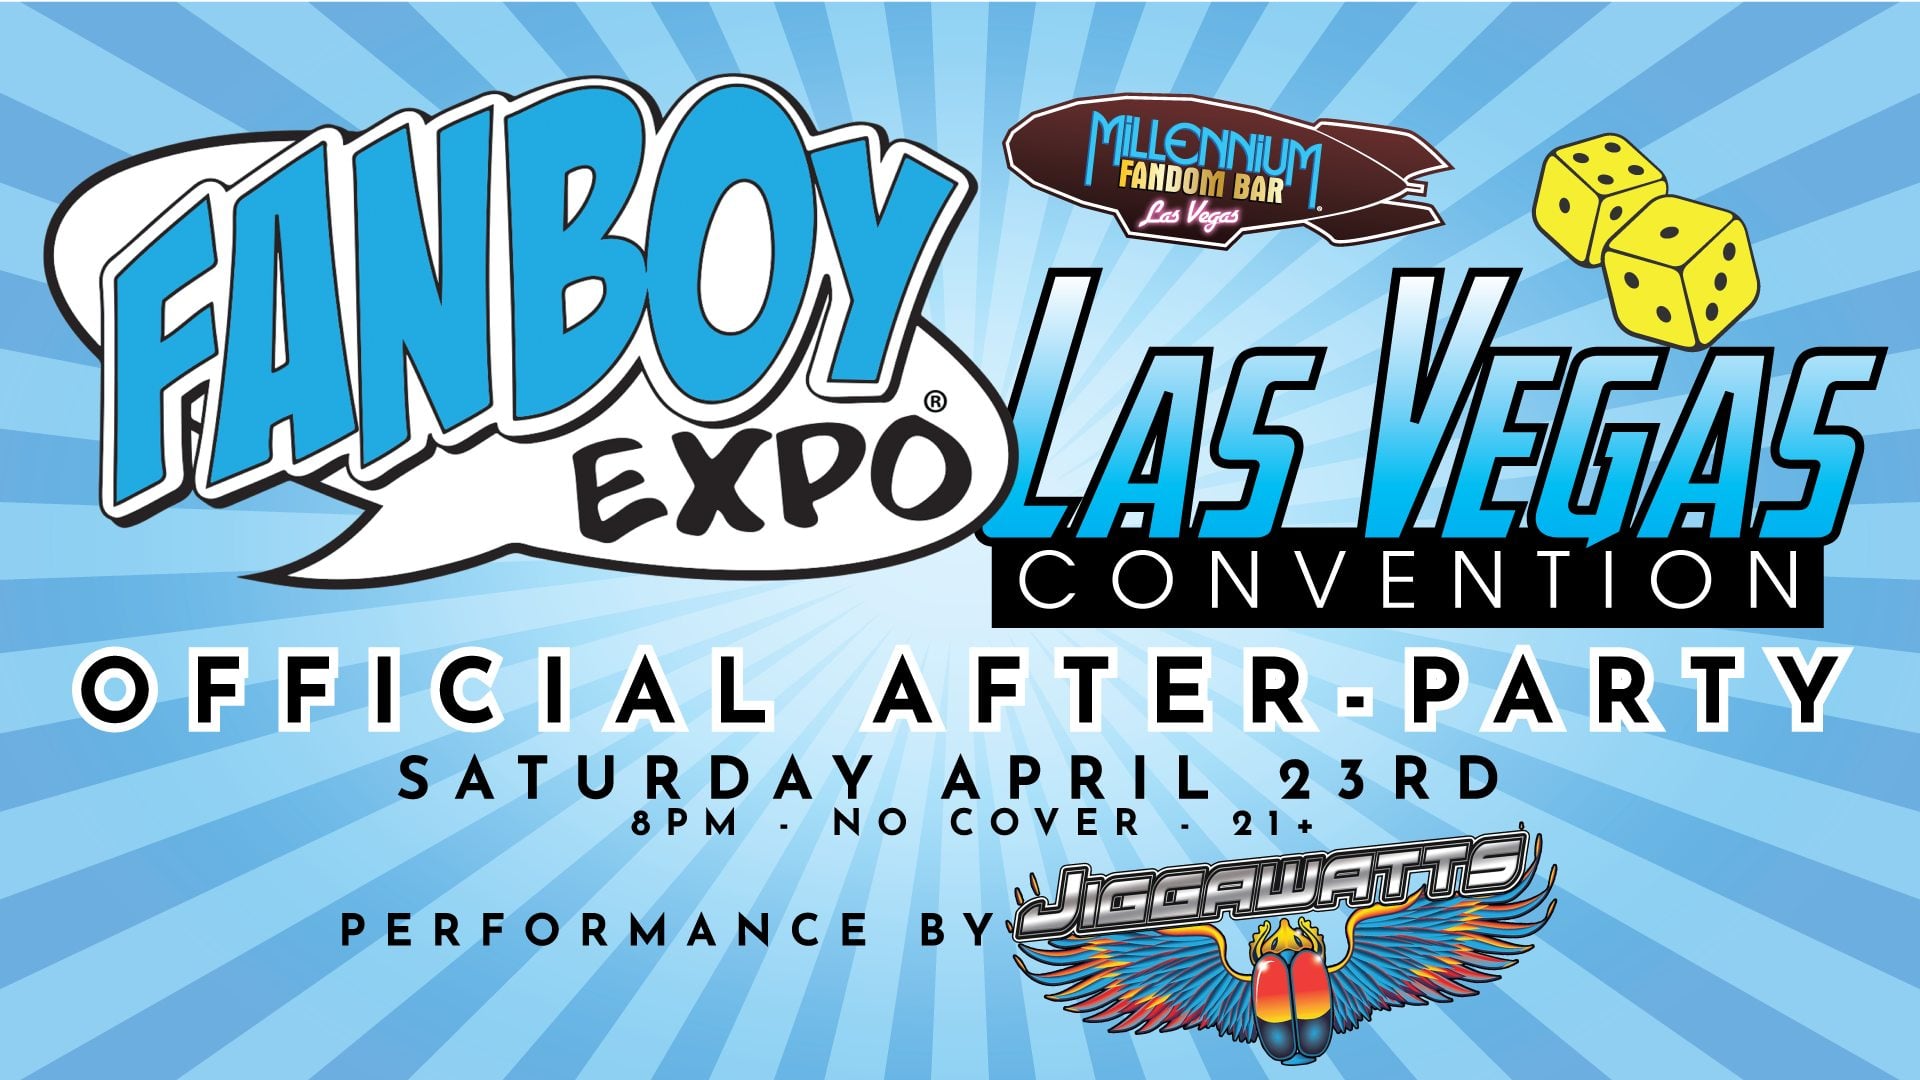 Fanboy Expo Las Vegas Schedule Fanboy Expo